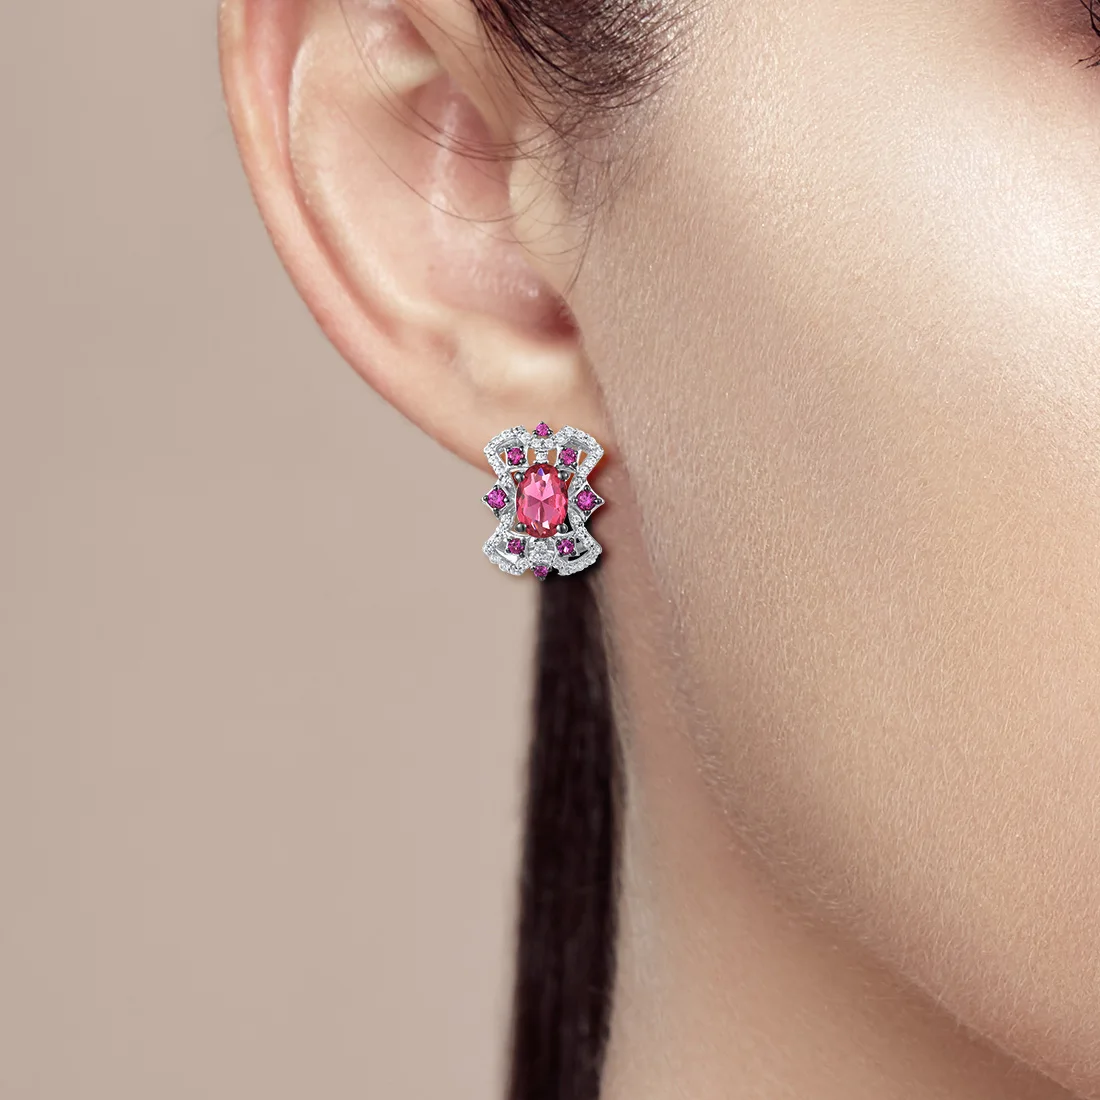 SANTUZZA 925 Sterling Silver Earrings For Women Sparkling Pink Red Stones White CZ Stud Earrings Elegant Gorgeous Fine Jewelry